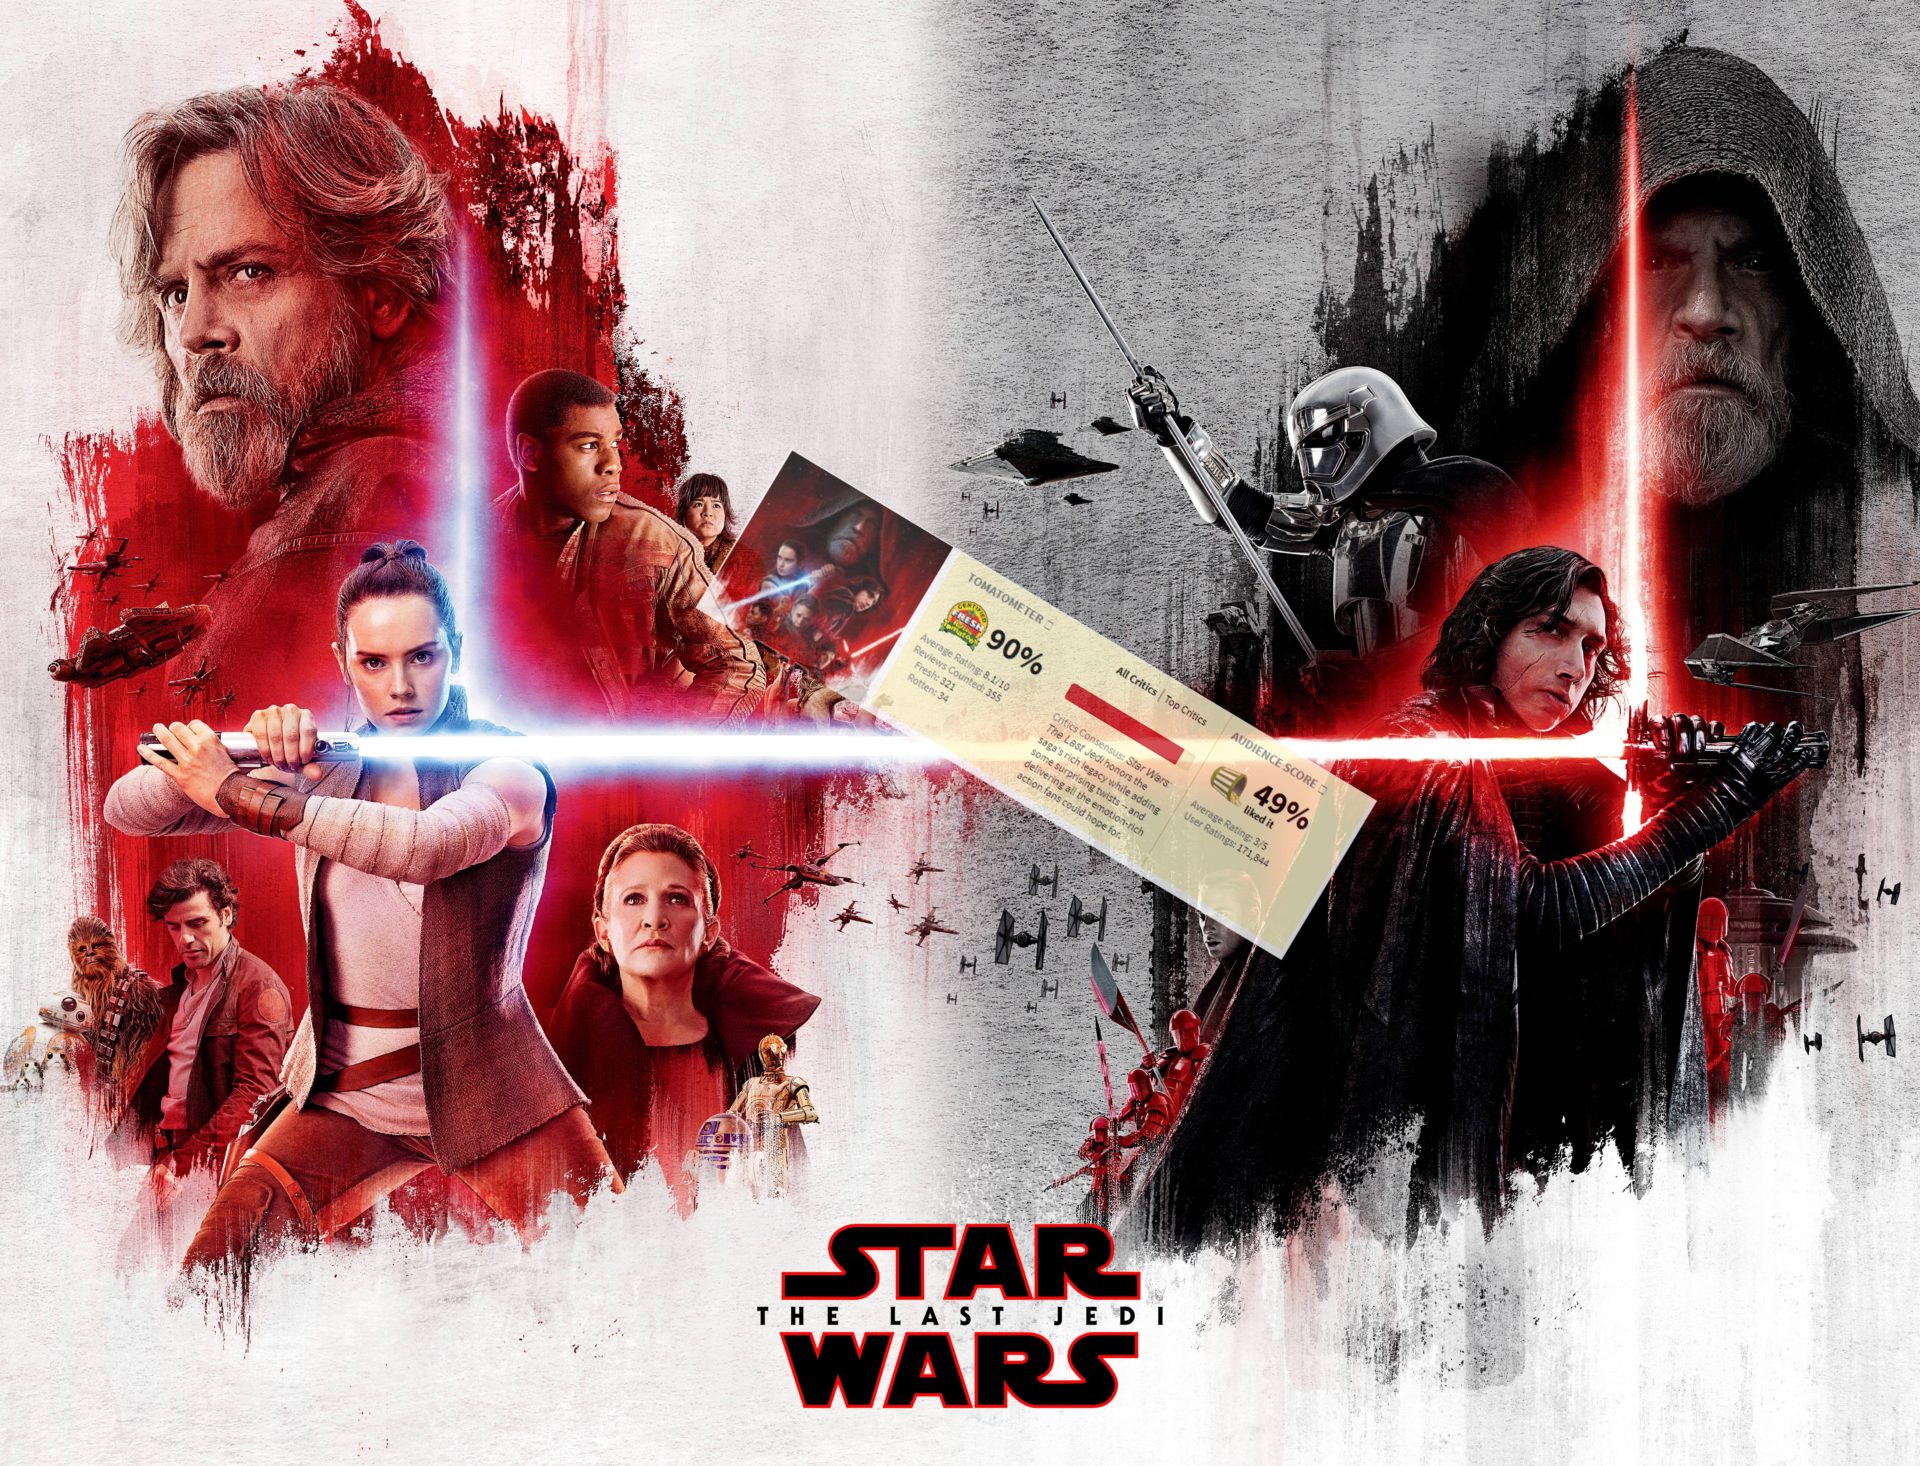 De volta a 'Star Wars', Mark Hamill lê teorias malucas sobre Luke